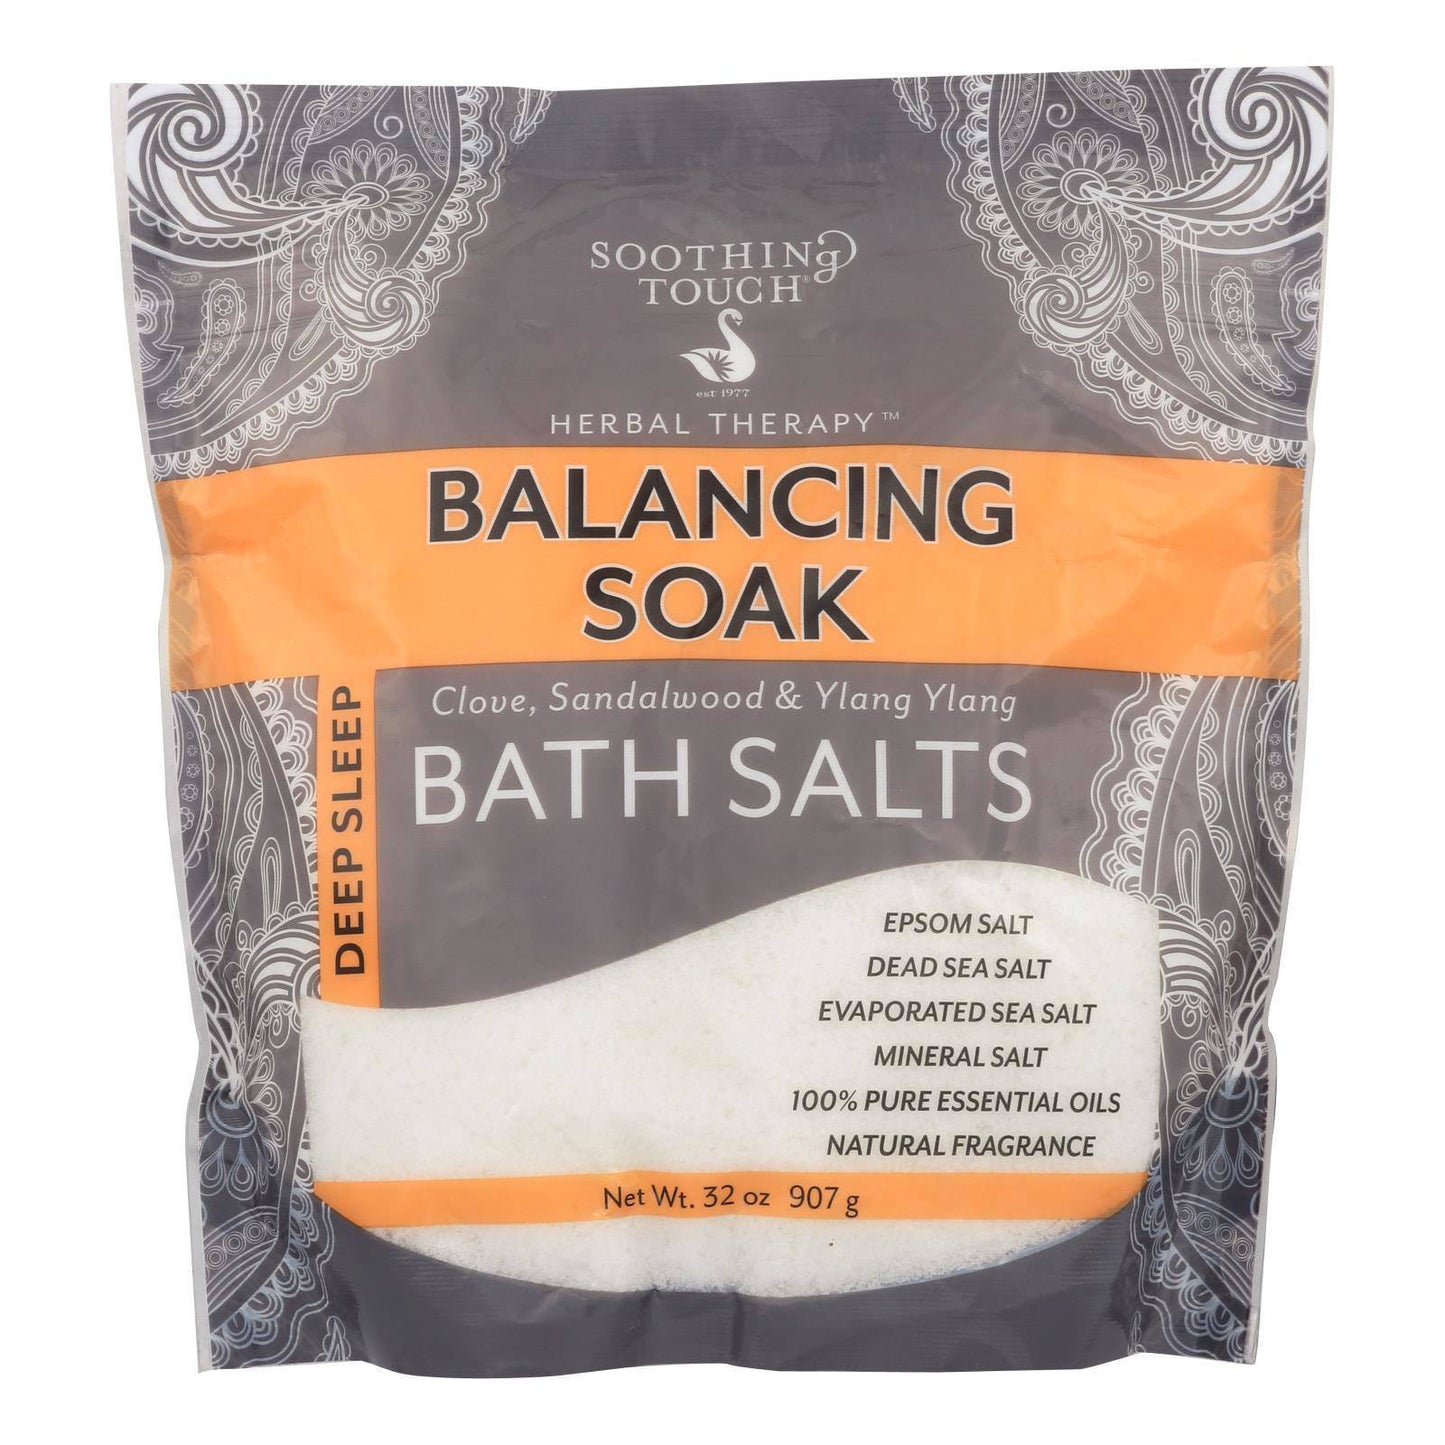 Bath Salts - Balancing Soak